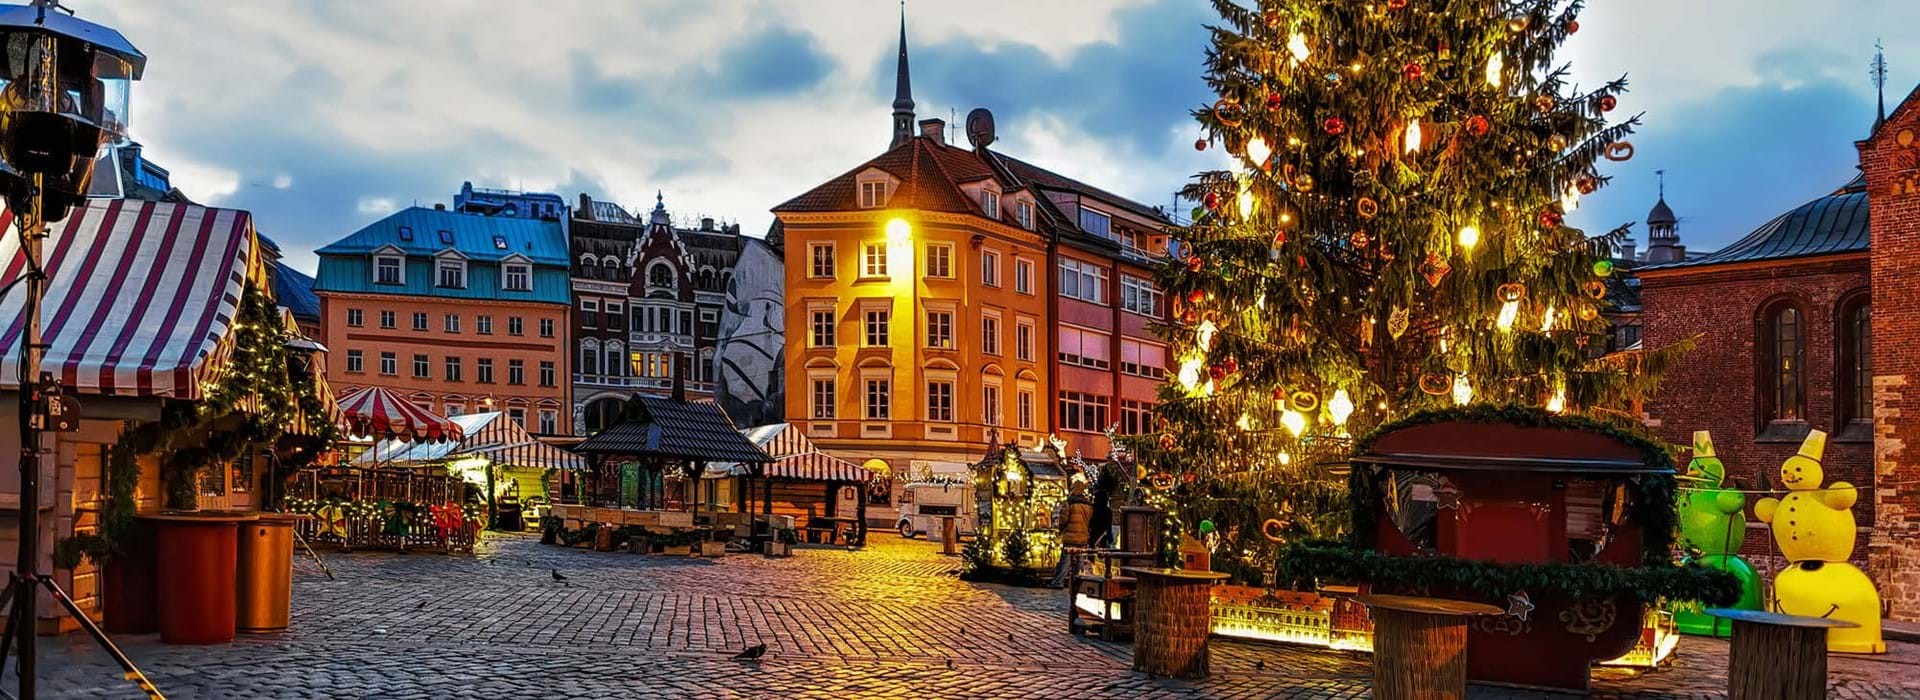 Riga Christmas Markets | Radio Times Travel